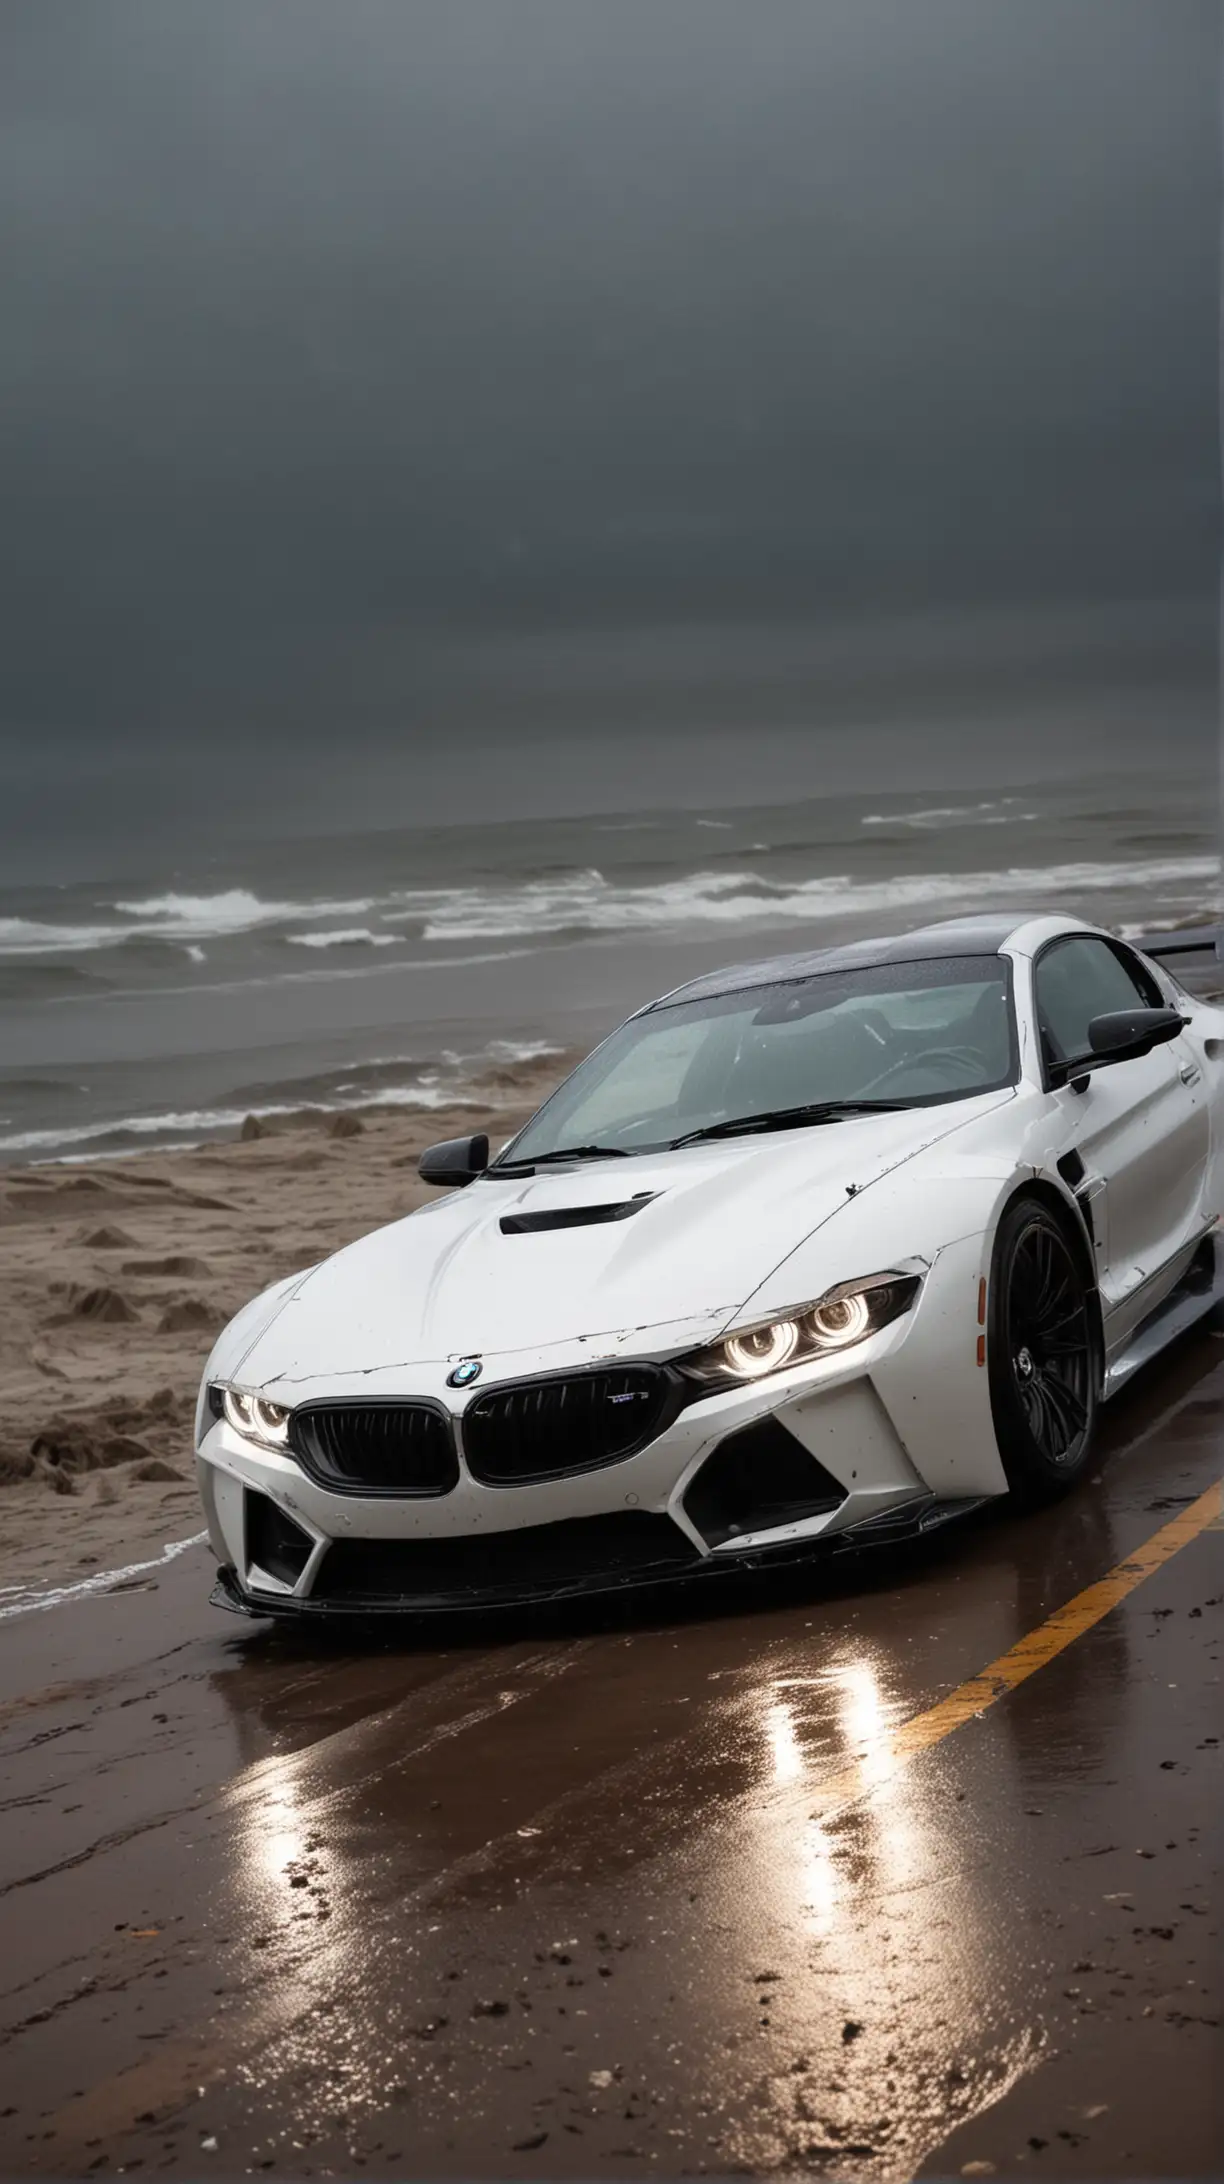 BMW Super Sports Car with White Headlights Against Hurricane Sandy Sky